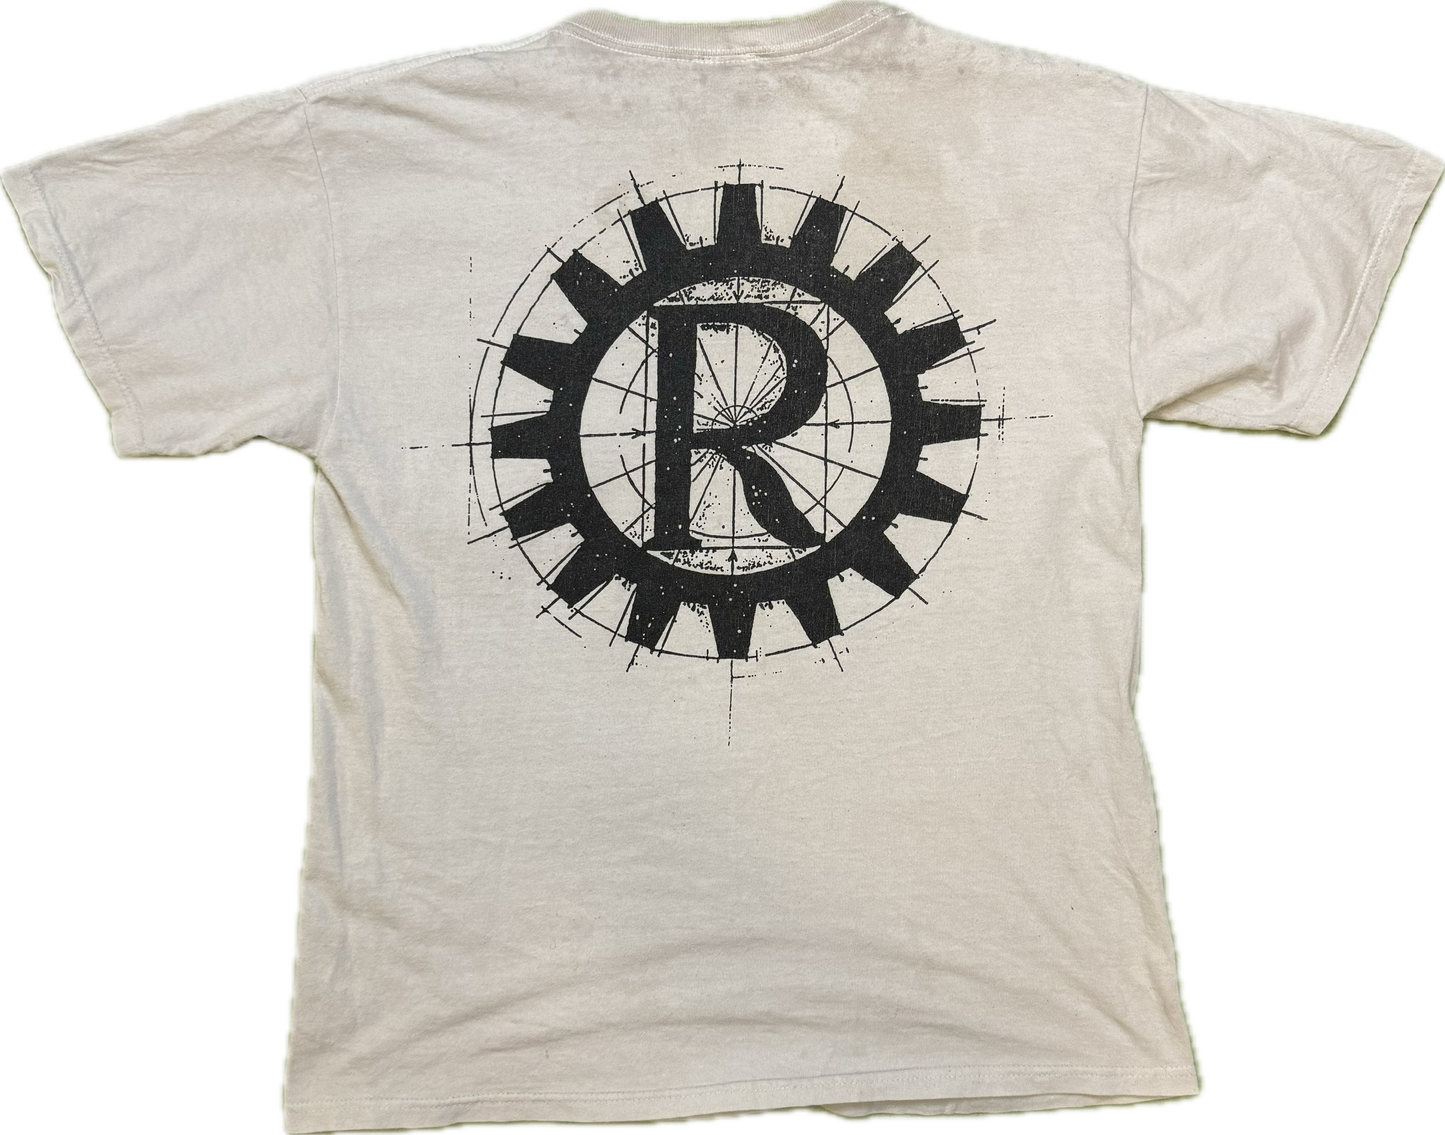 1997 Rage Against The Machine Vintage T Shirt